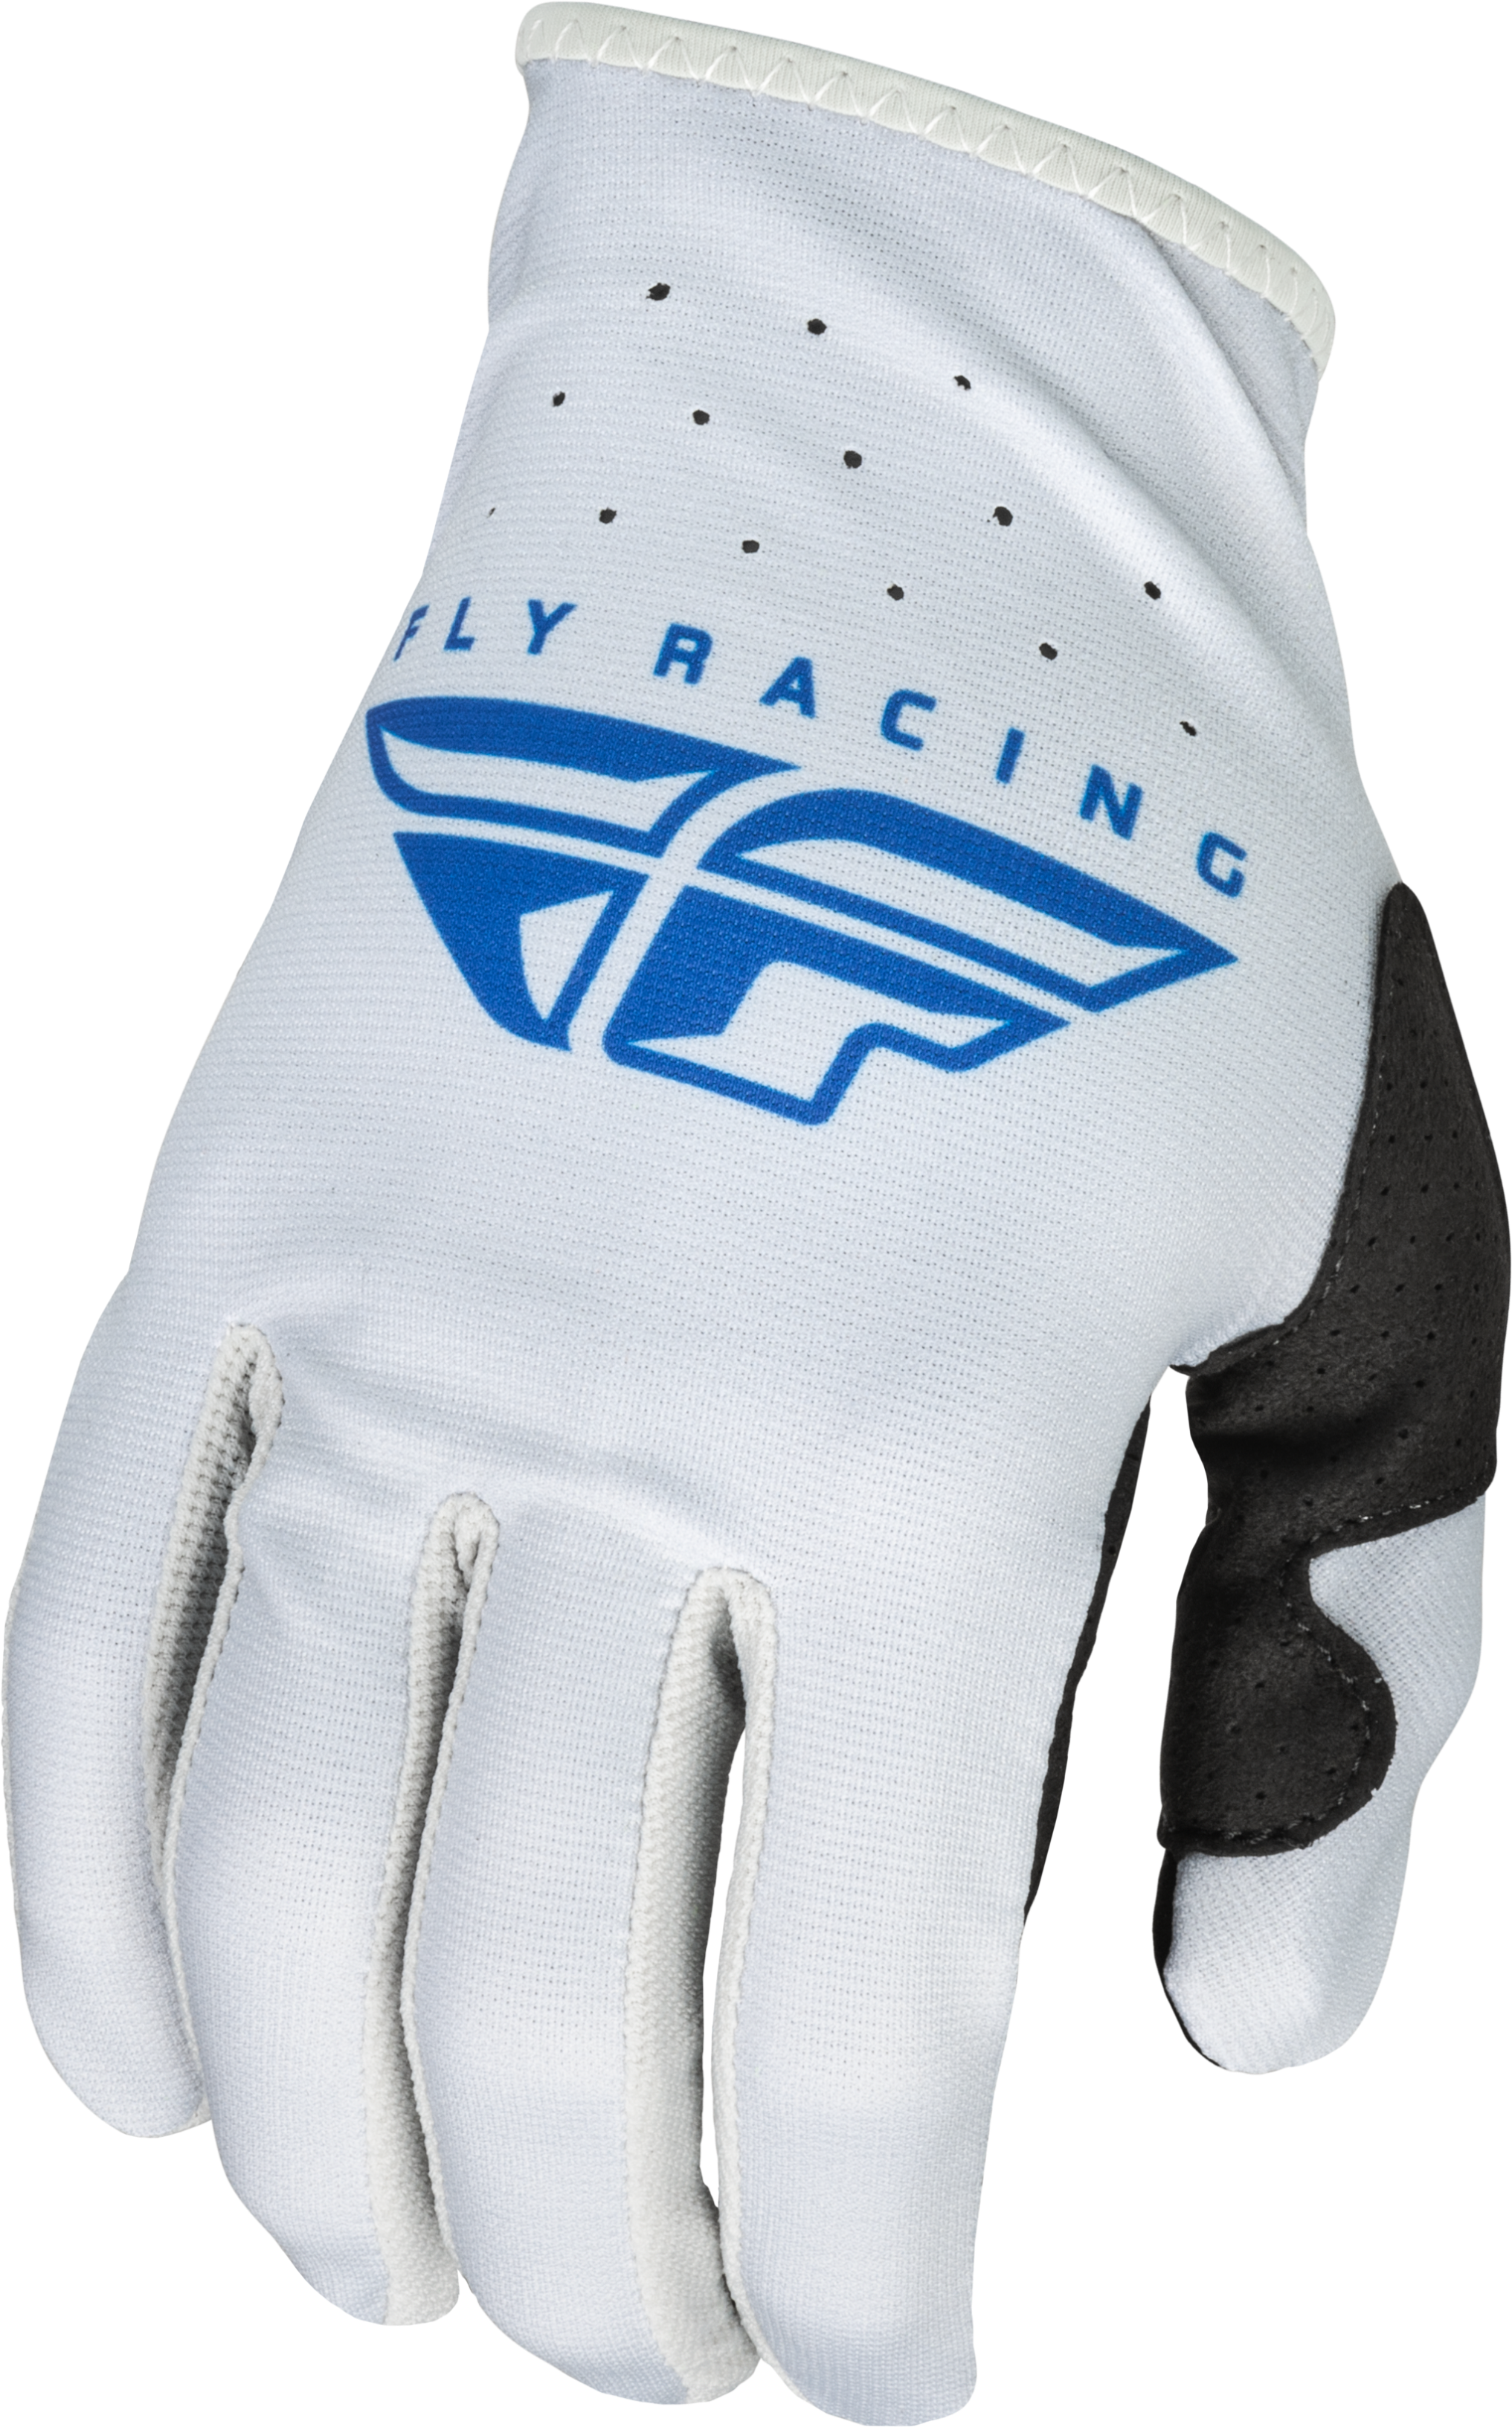 Fly Racing - Youth Lite Gloves Grey/blue Ym - 376-716YM